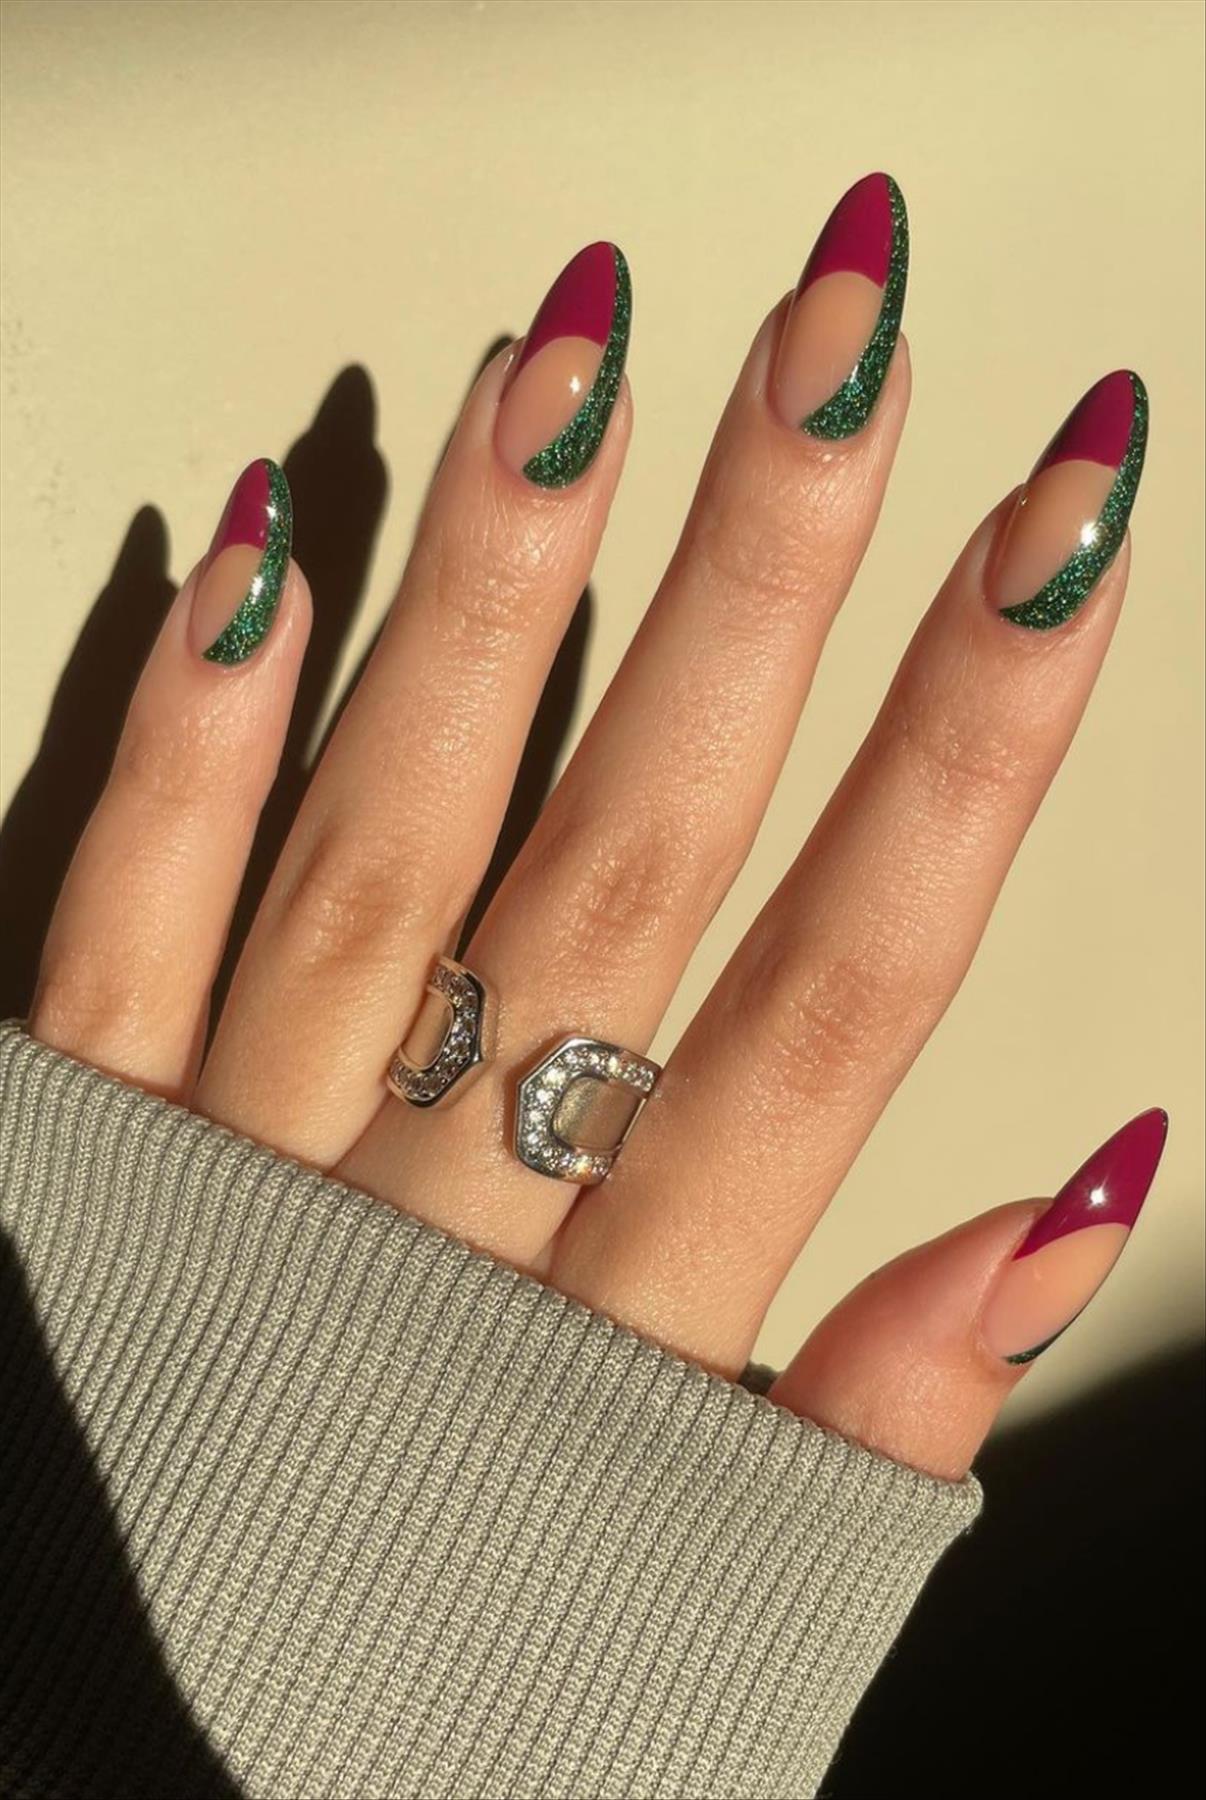 Best Christmas nails design